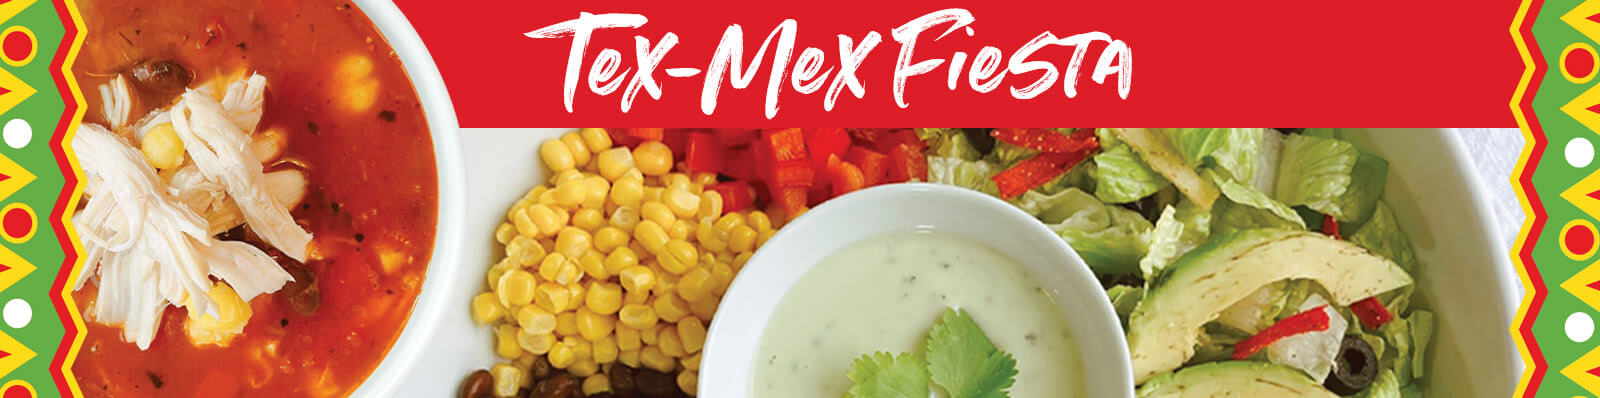 Tex Mex Fiesta at Souper Salad